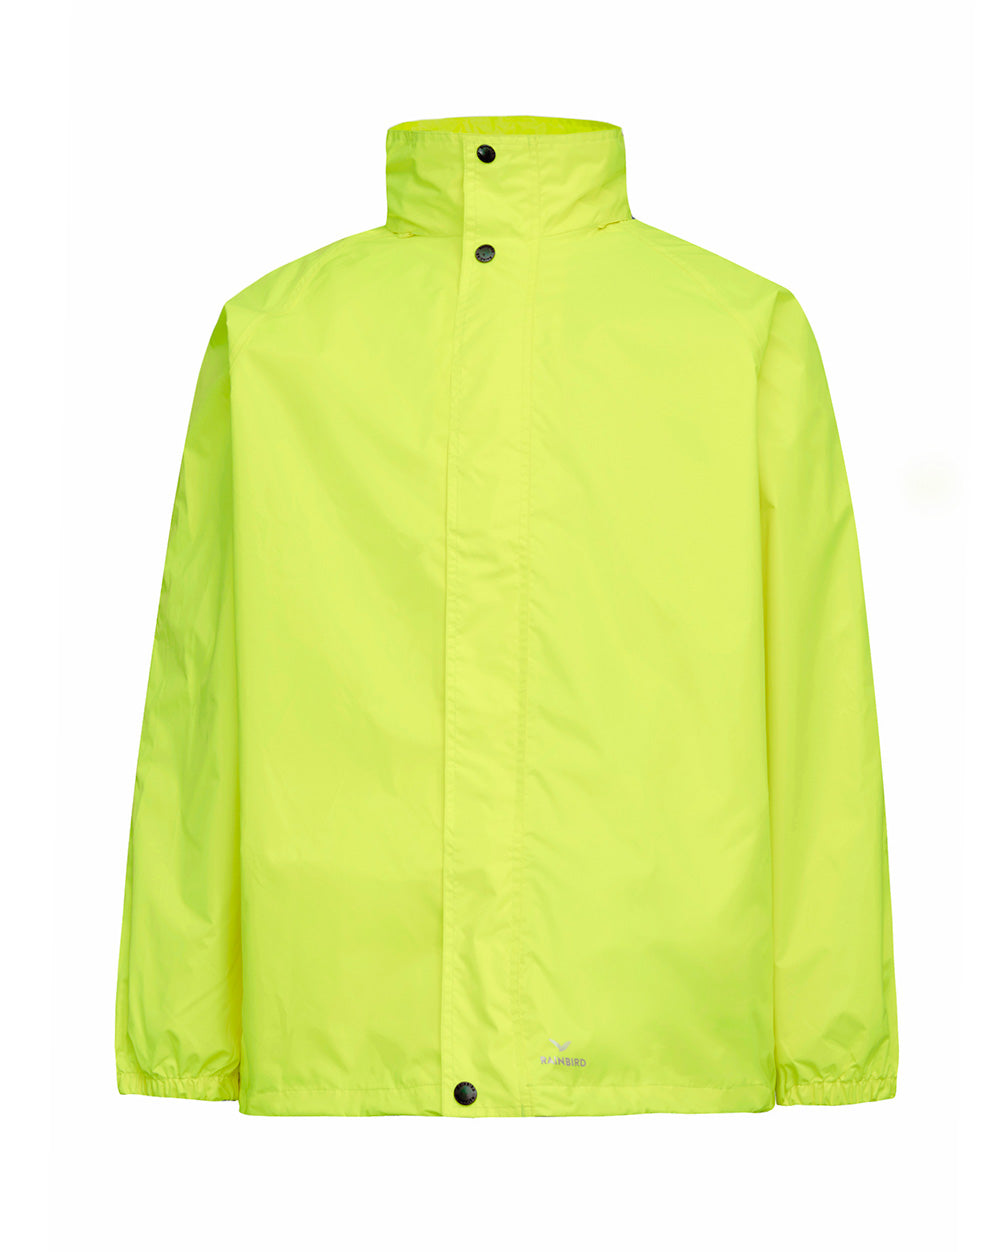 STOWaway Jacket in Fluoro Yellow